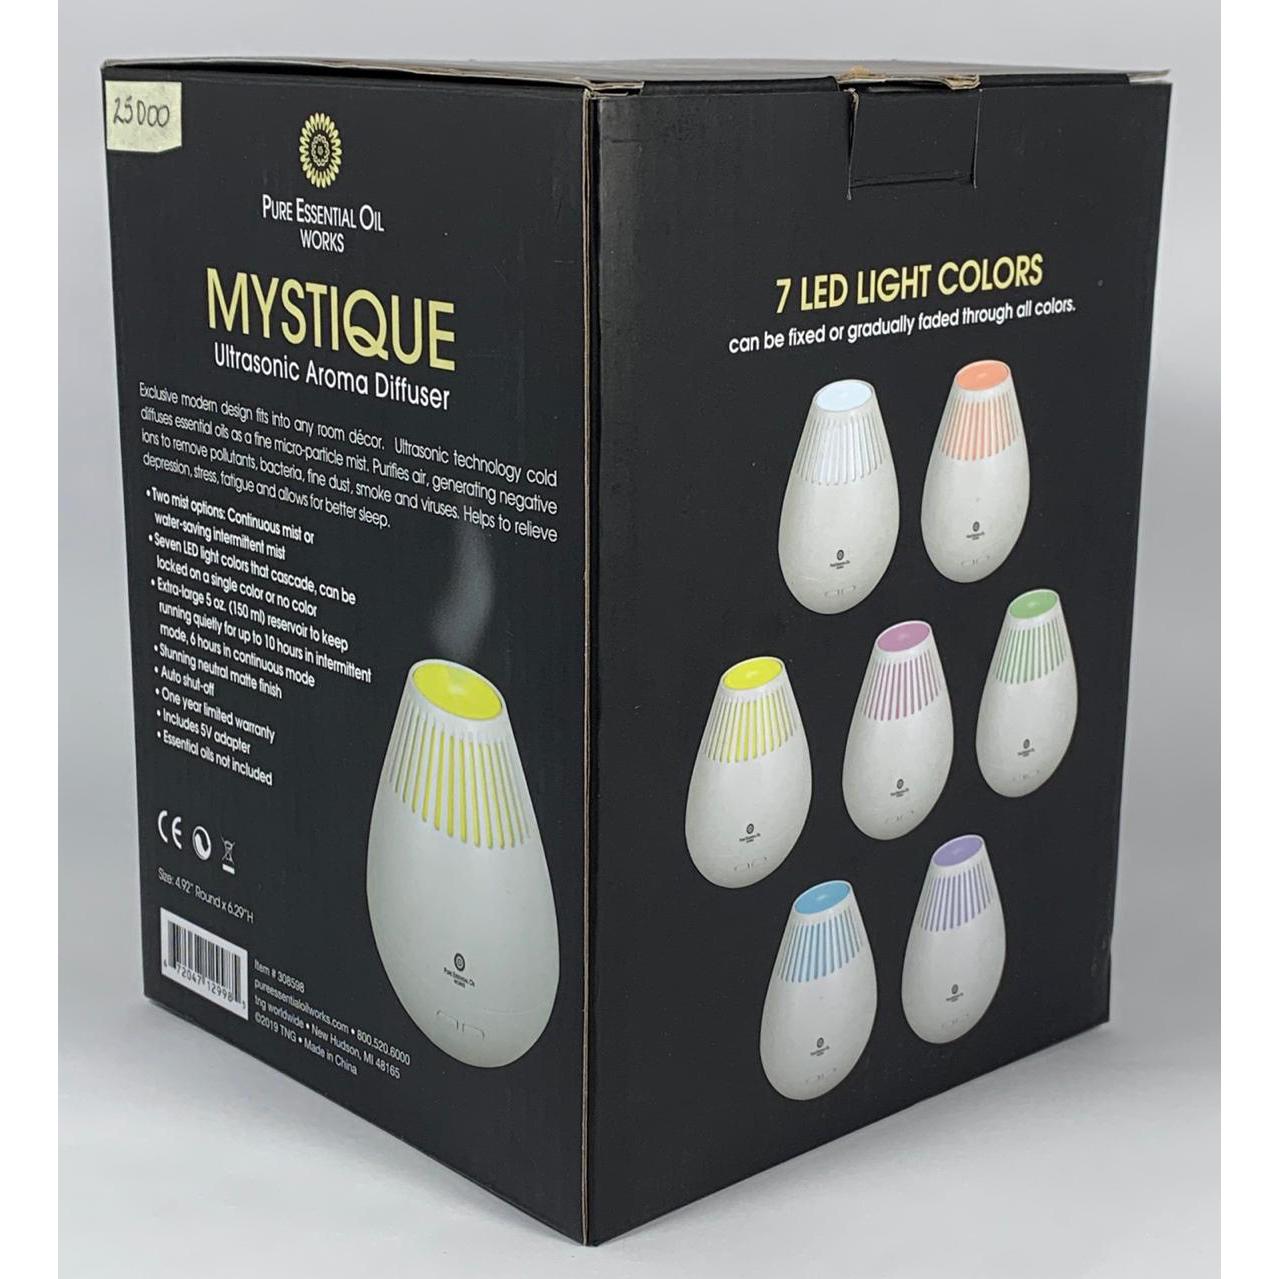 MYSTIQUE Difusor LED - The Gift Shop Costa Rica